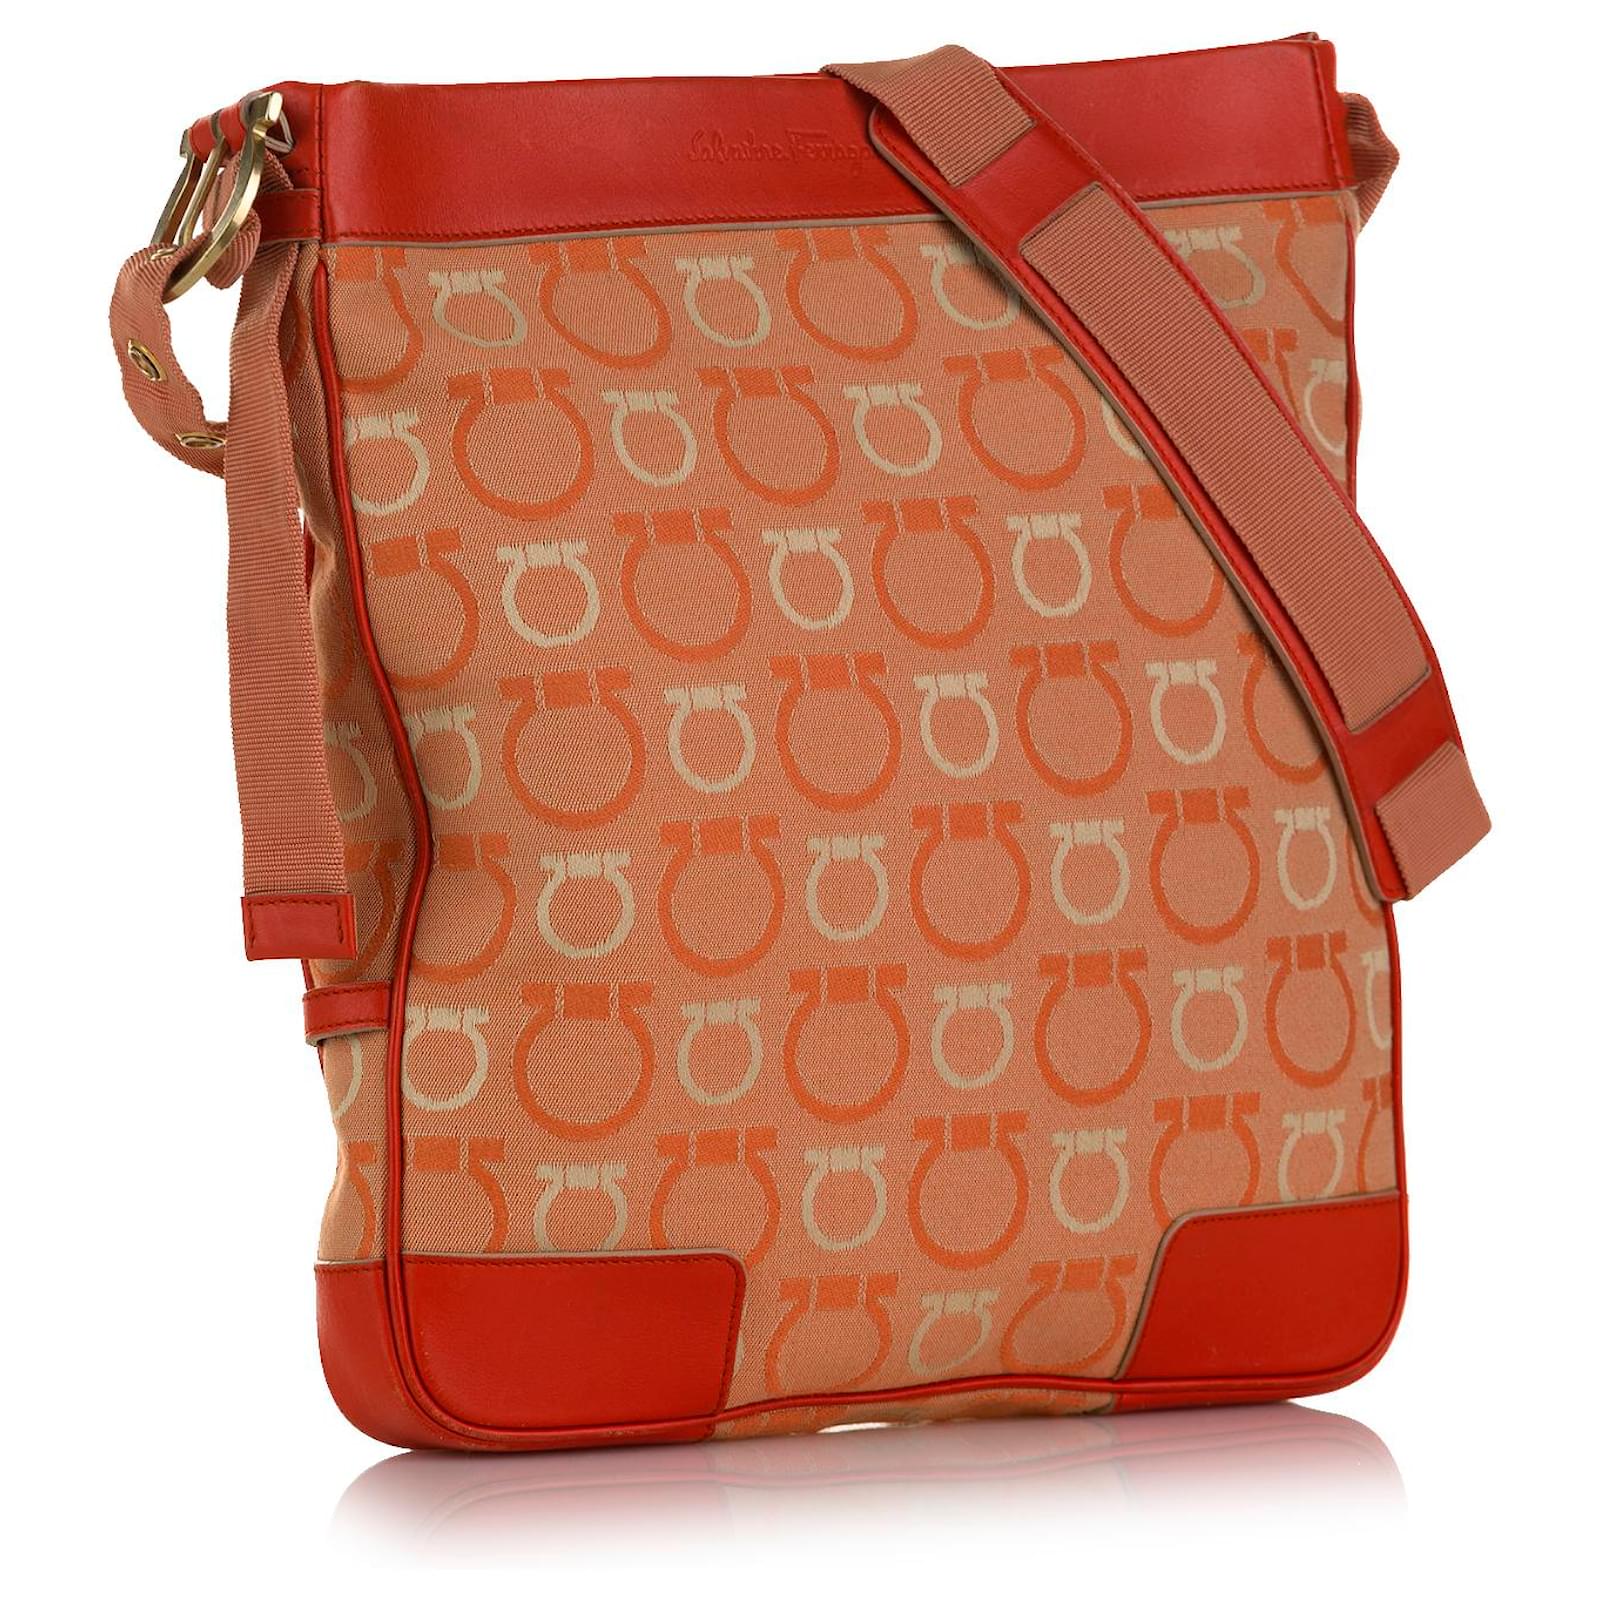 Salvatore Ferragamo Nylon Exterior Brown Bags & Handbags for Women